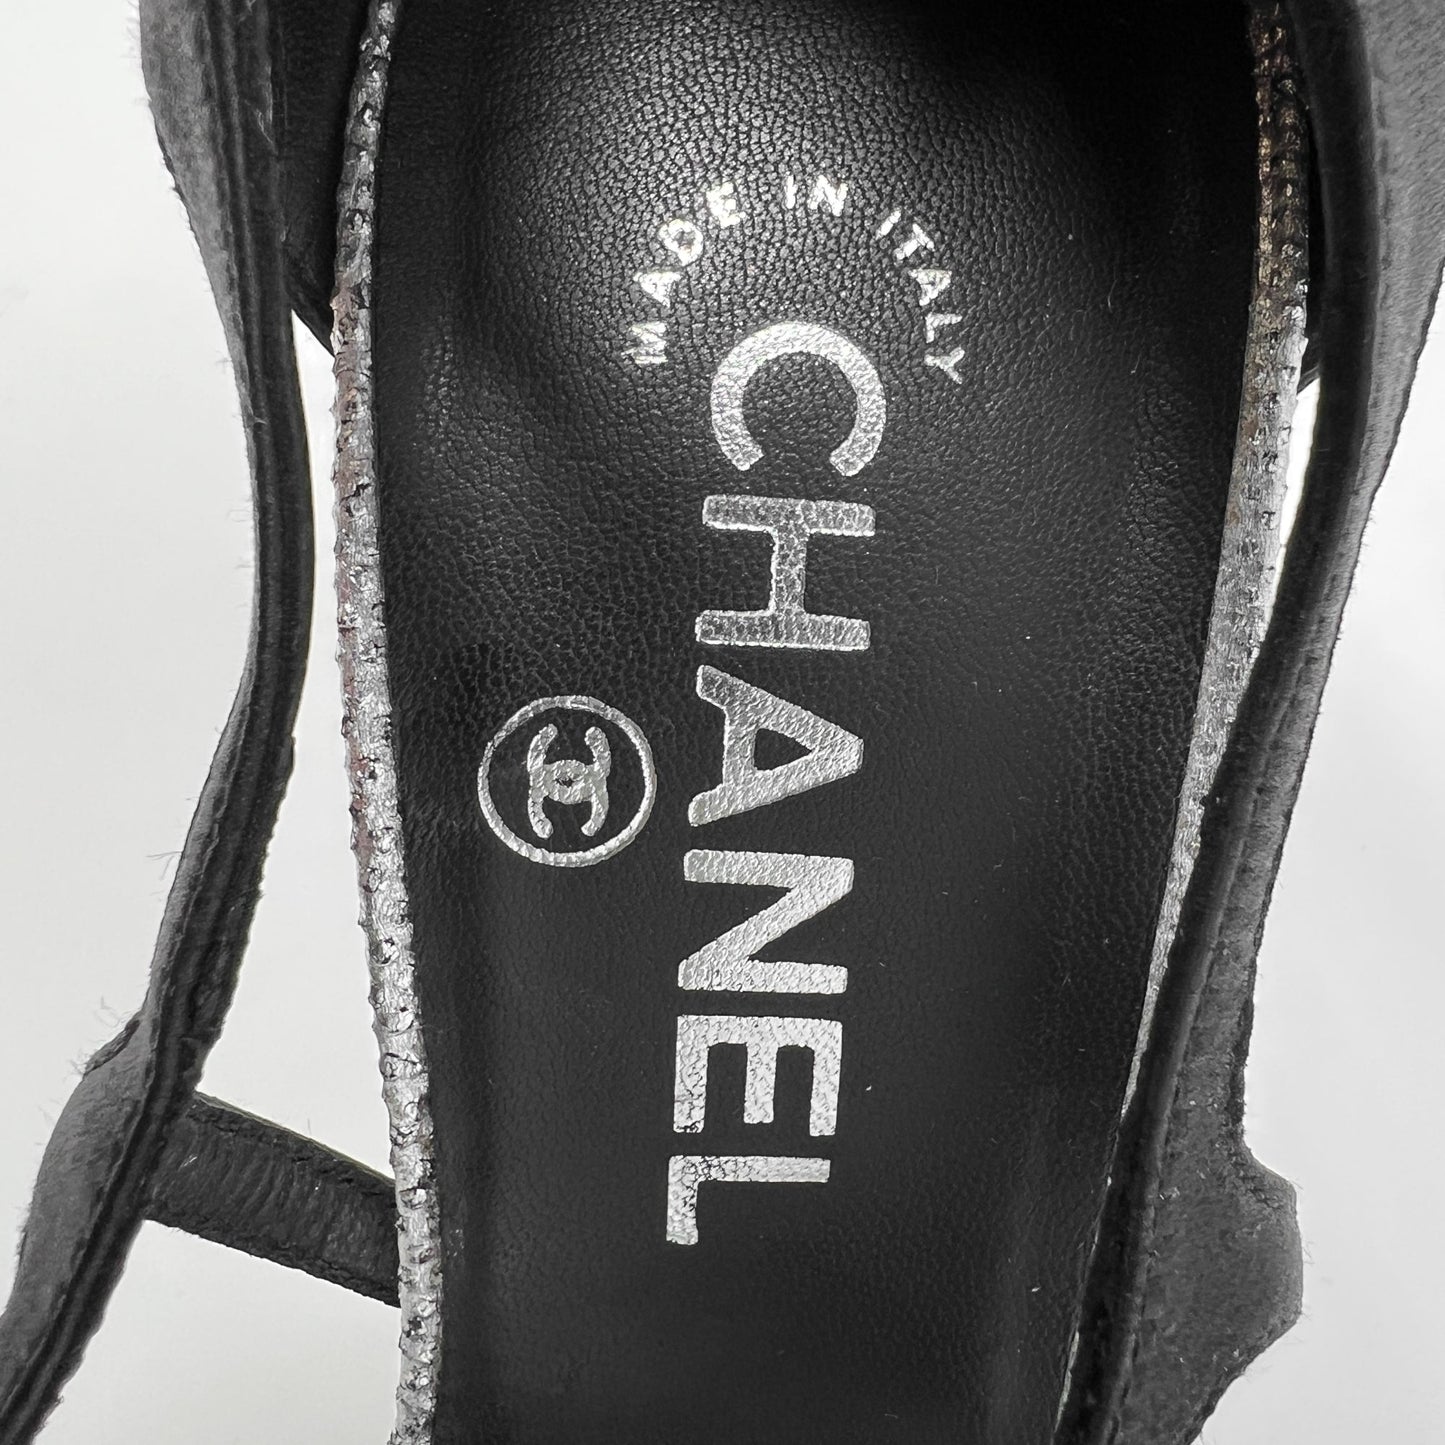 Chanel 2009 Crystal Pearl Metal Camellia Black Satin Silver High Heel Sandals Size EU 39.5